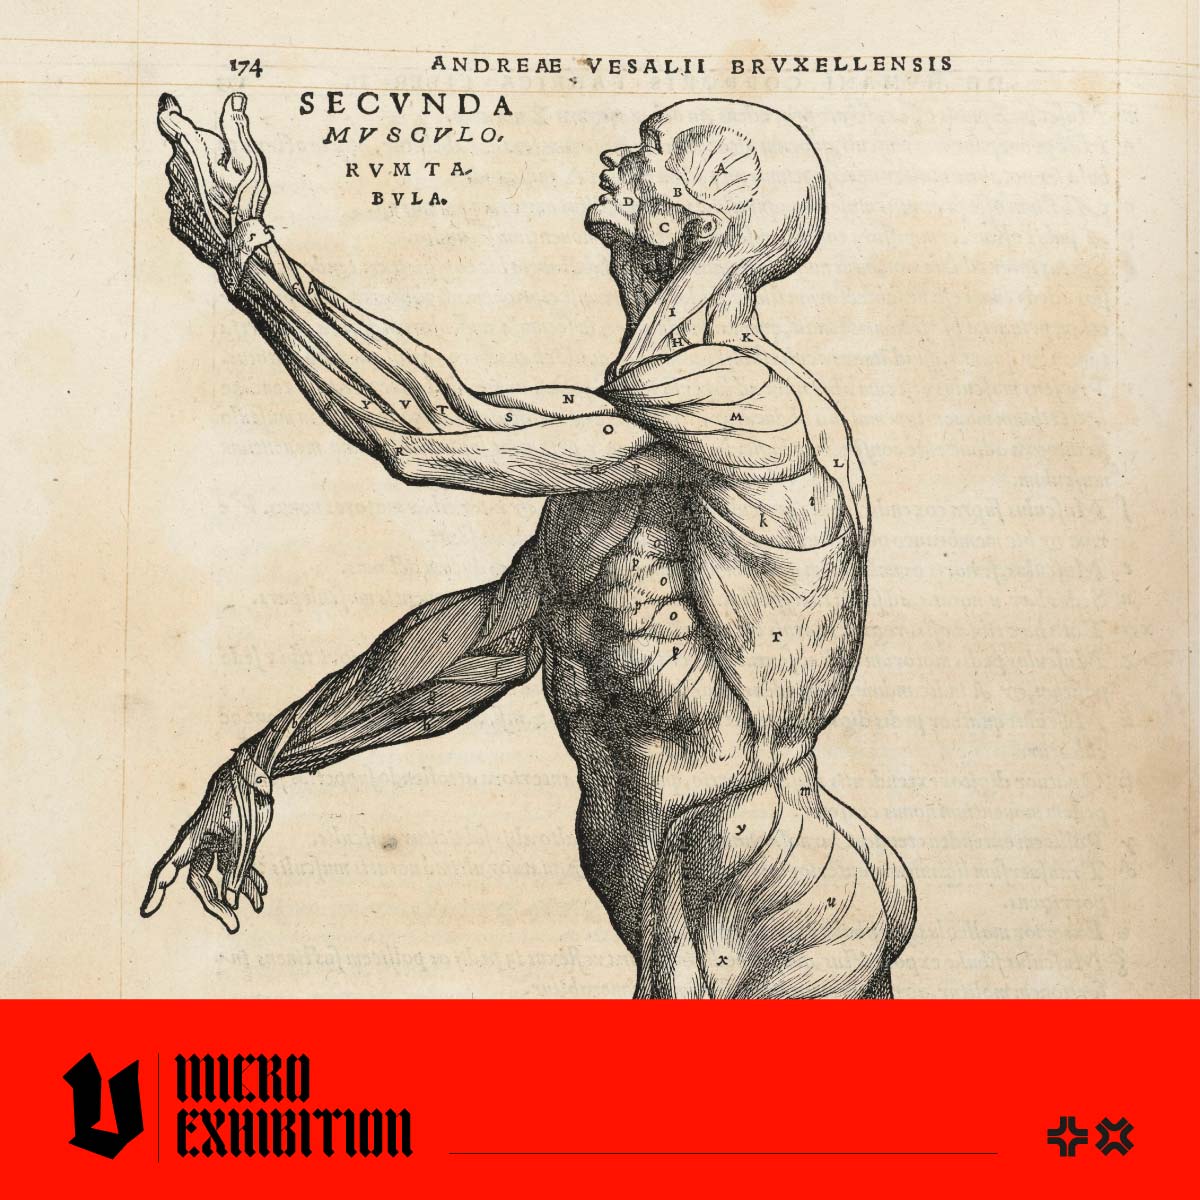 Andreas Vesalius: The Founder of Modern Anatomy